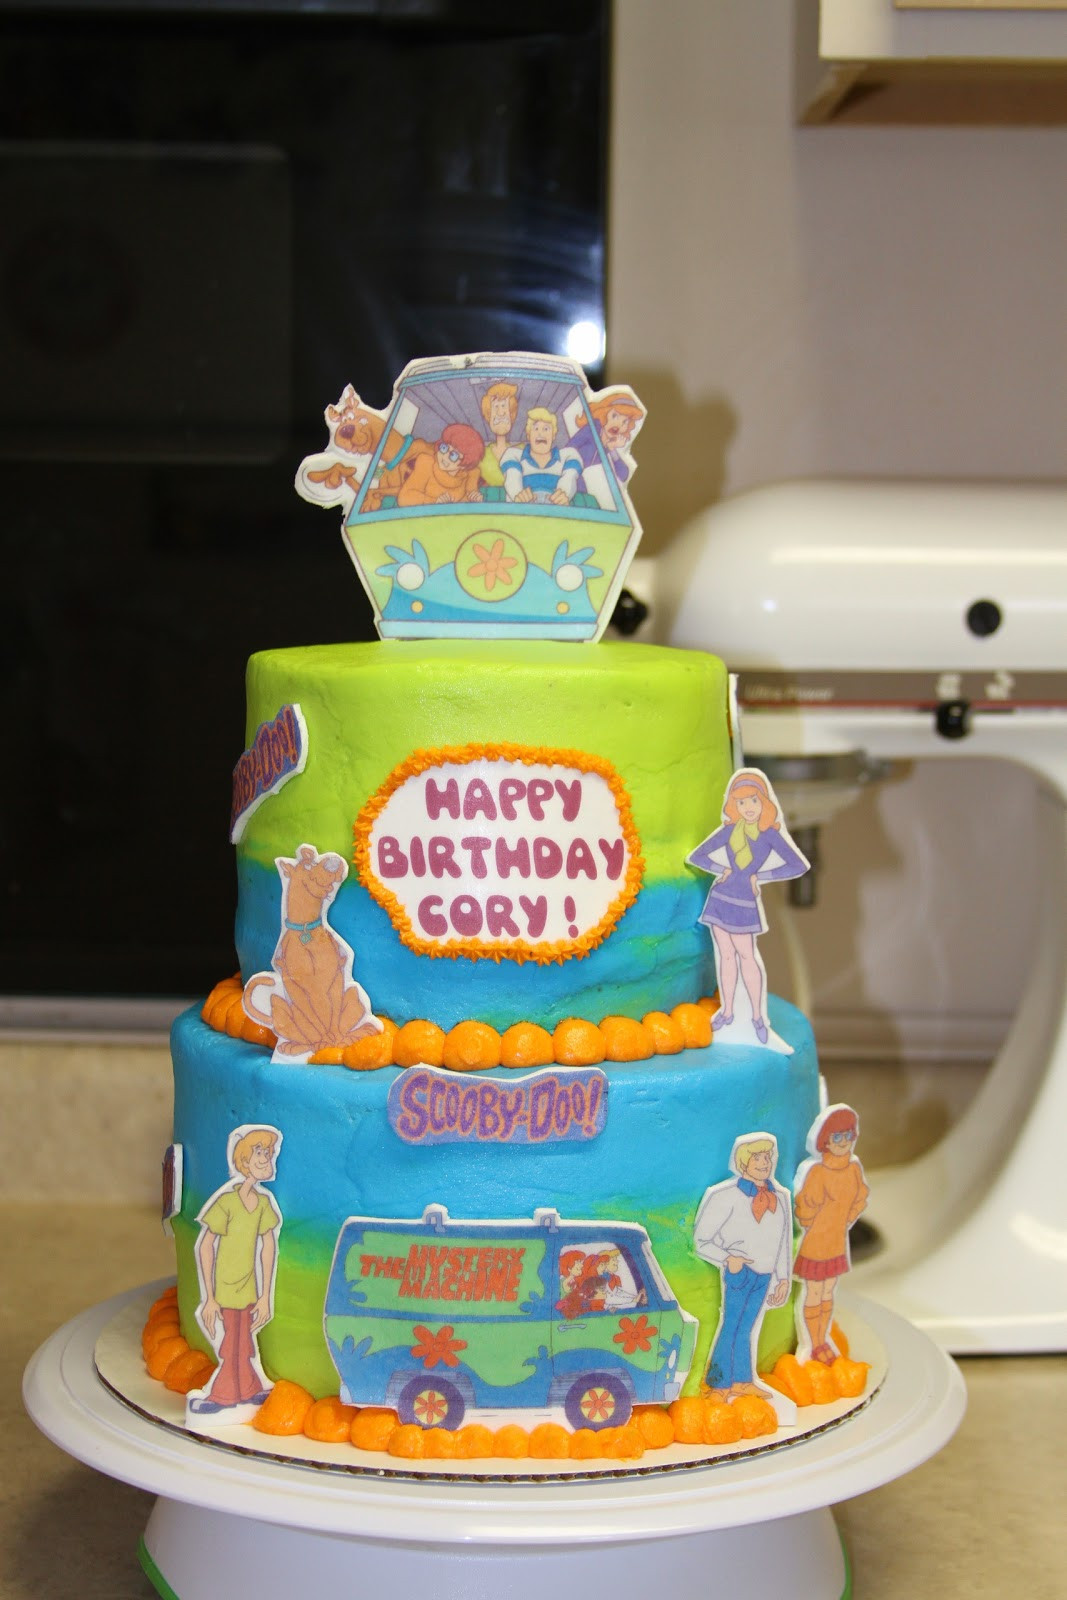 Scooby Doo Birthday Cake
 Michele Robinson Cakes Scooby Doo Cake